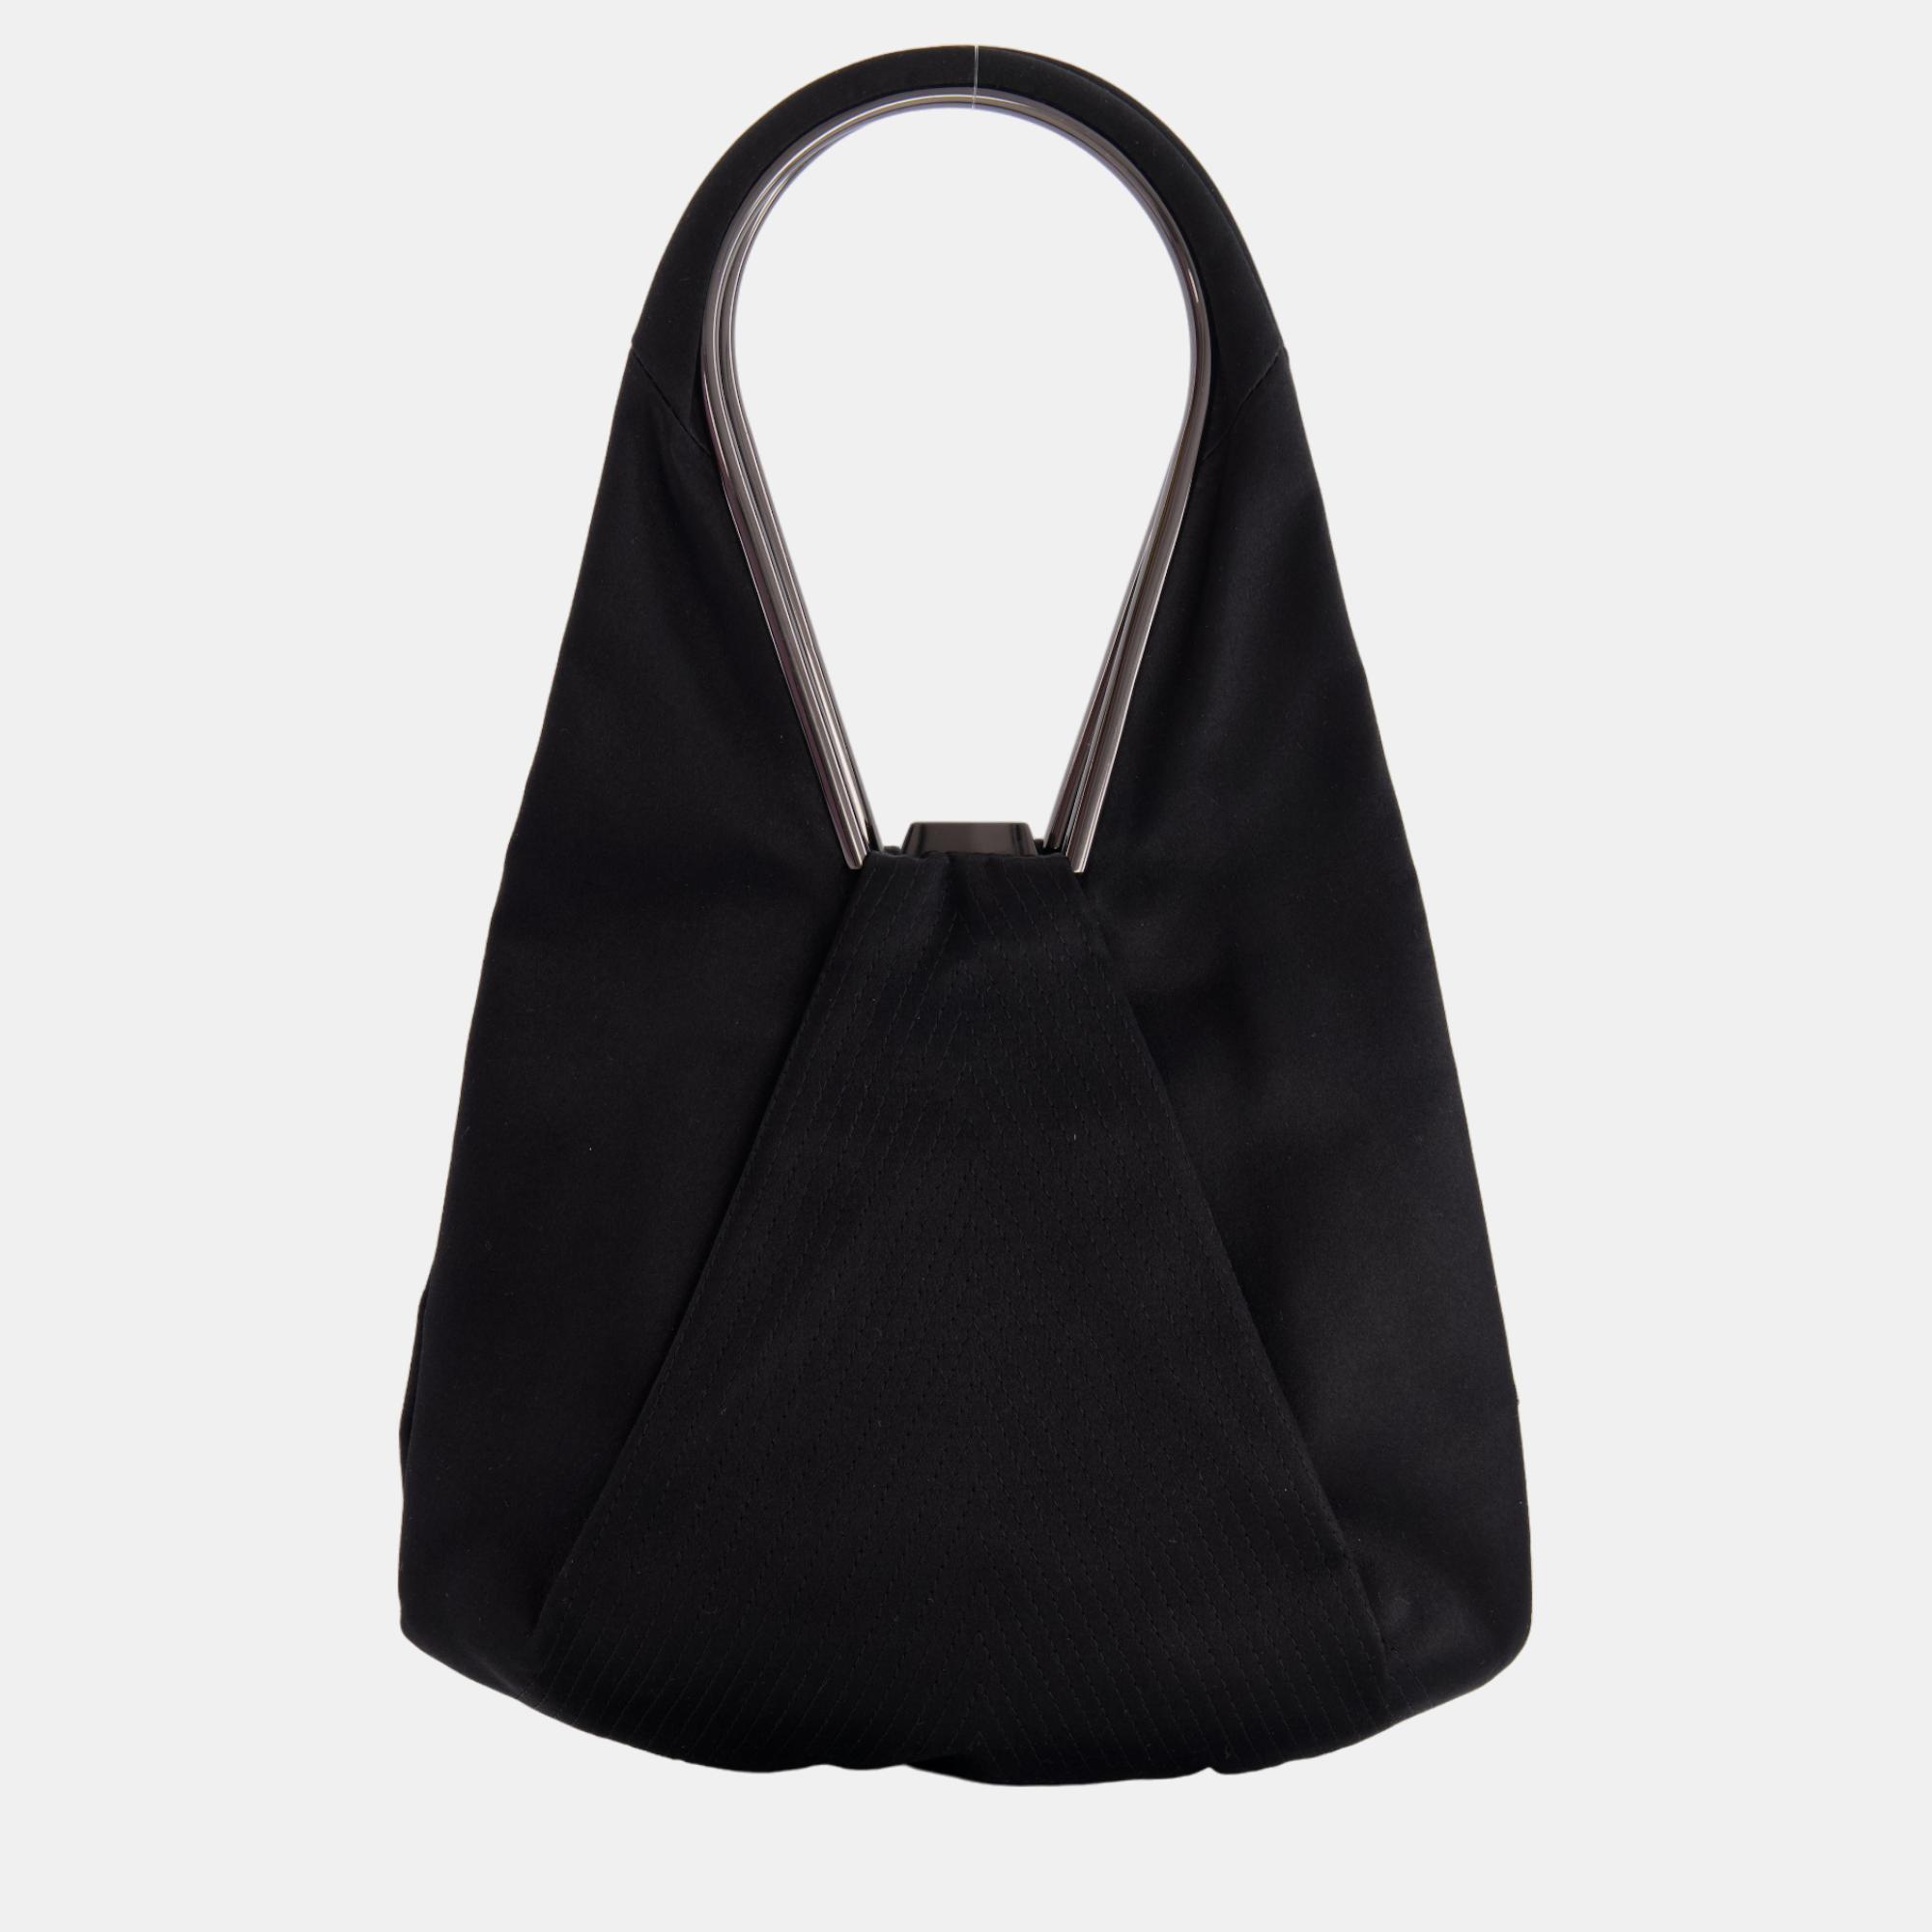 Salvatore ferragamo black satin top handle bag